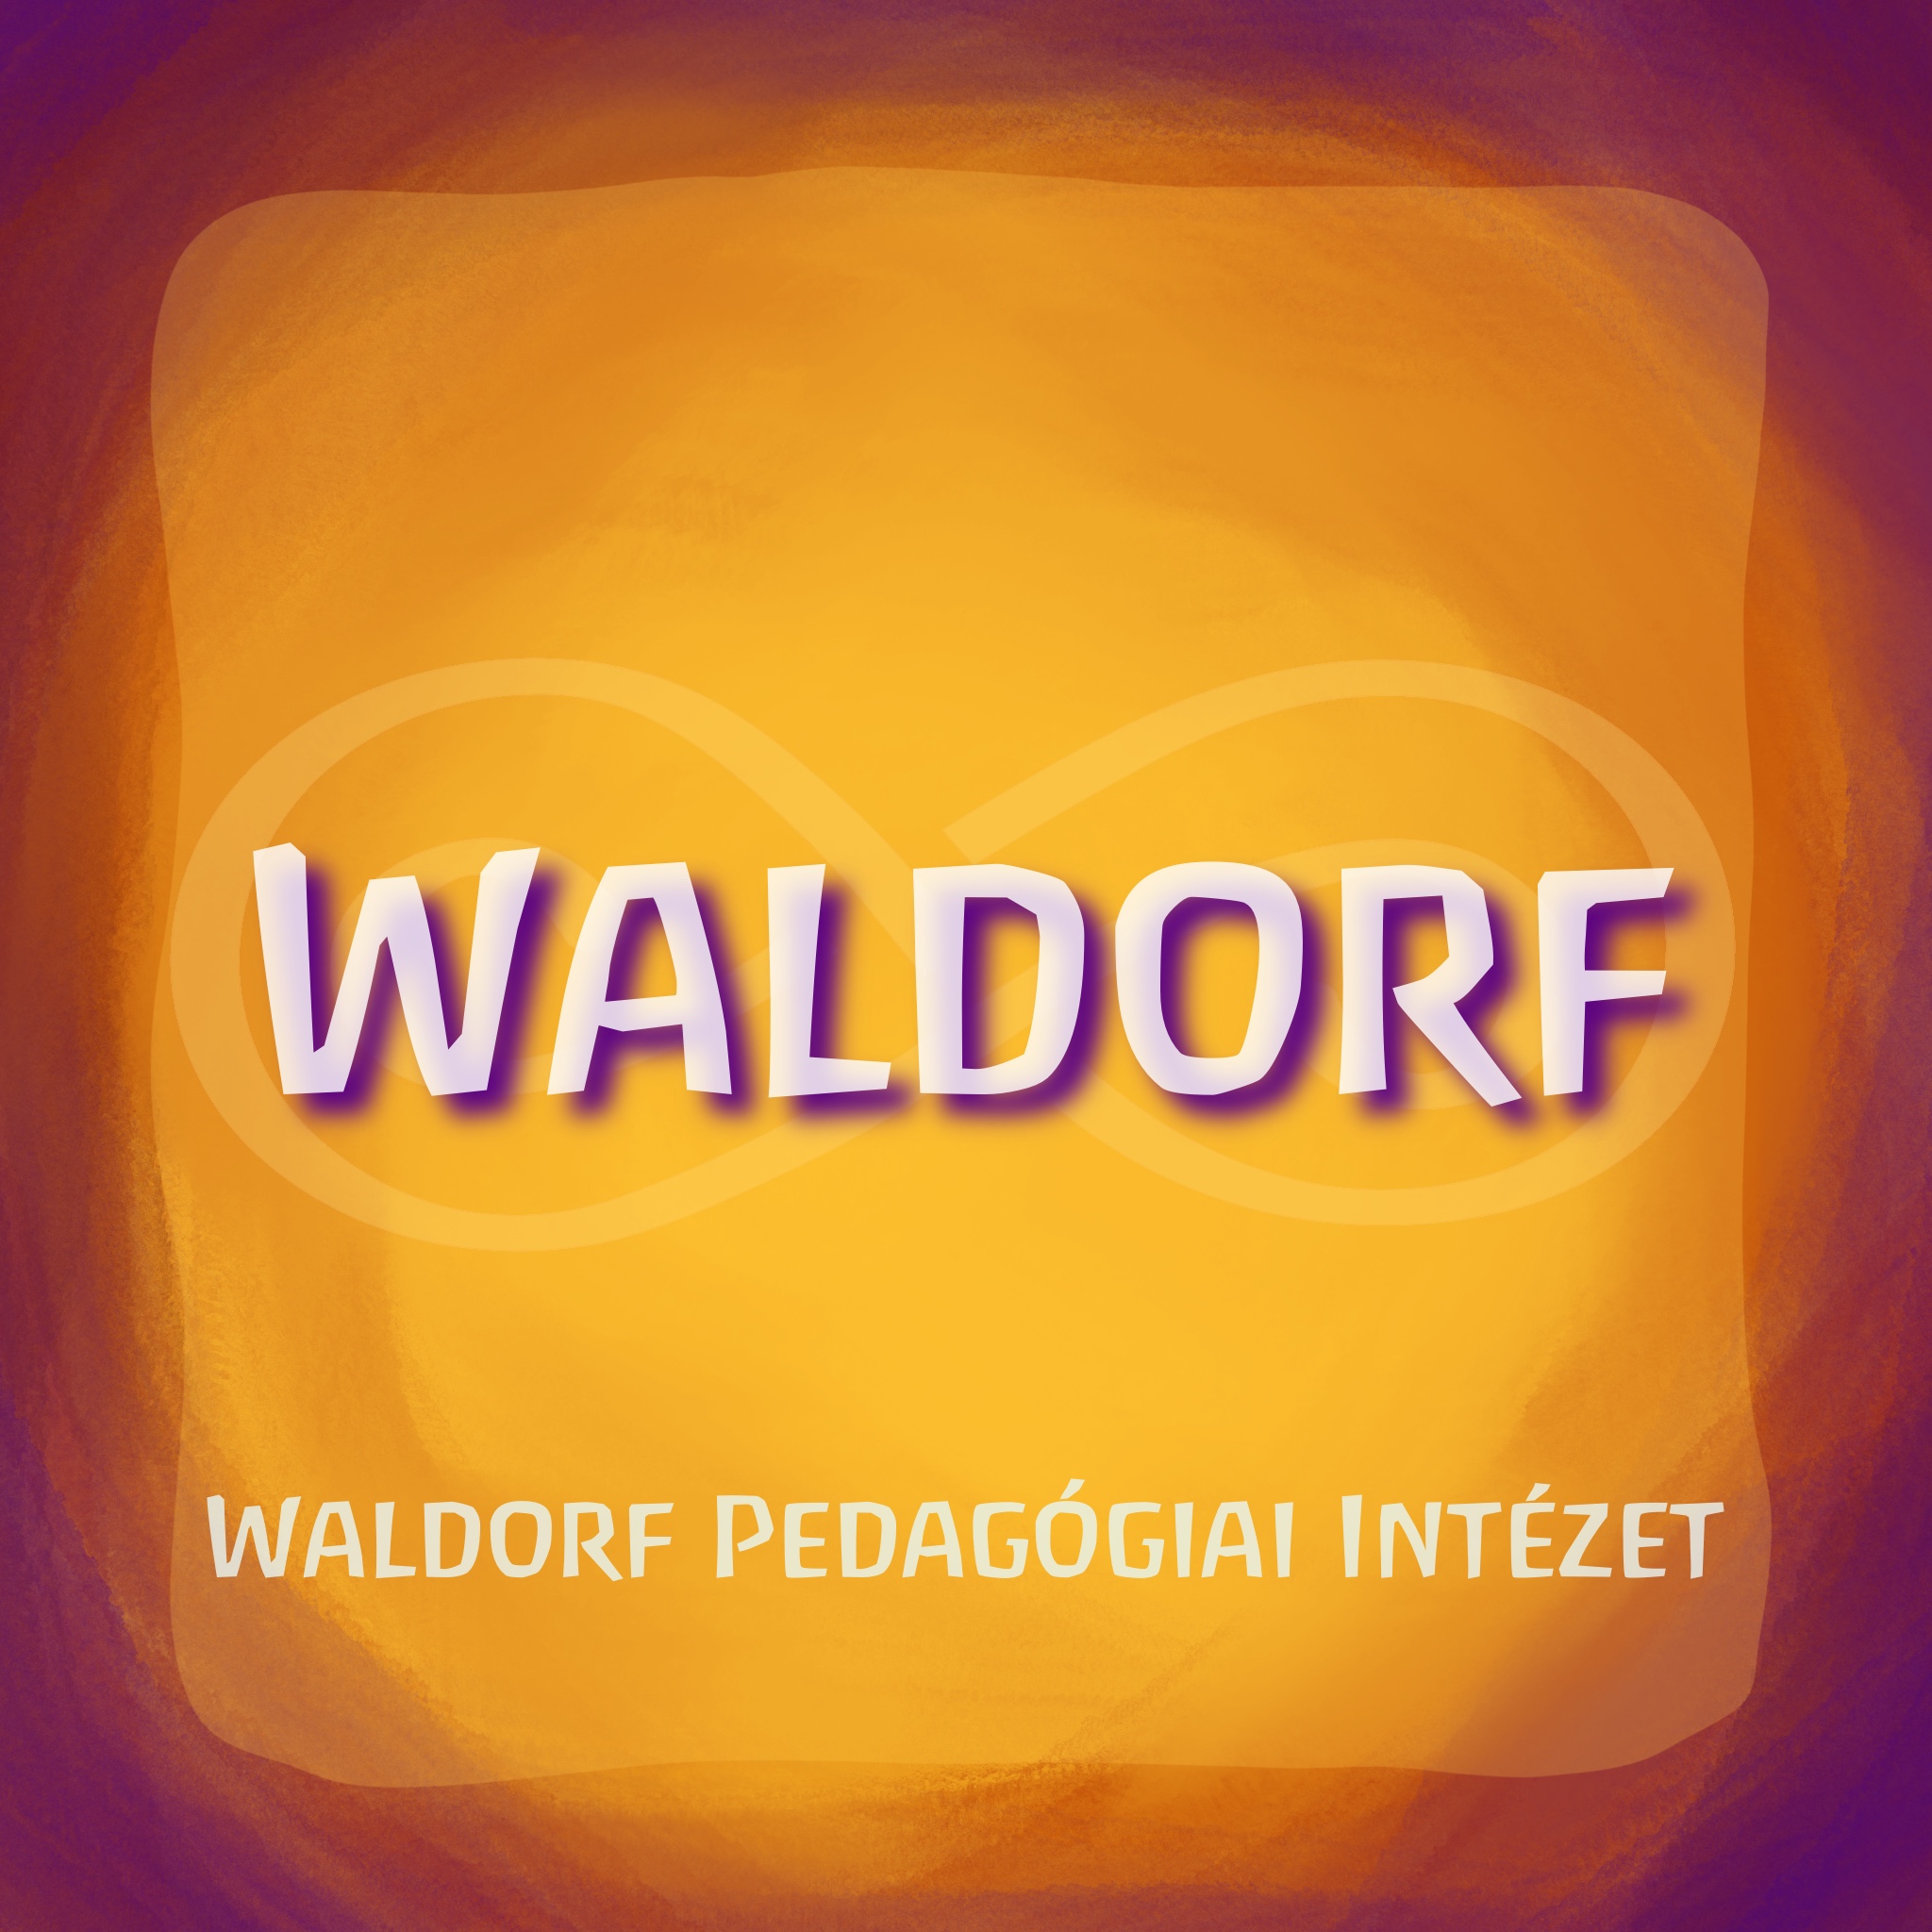 waldorf